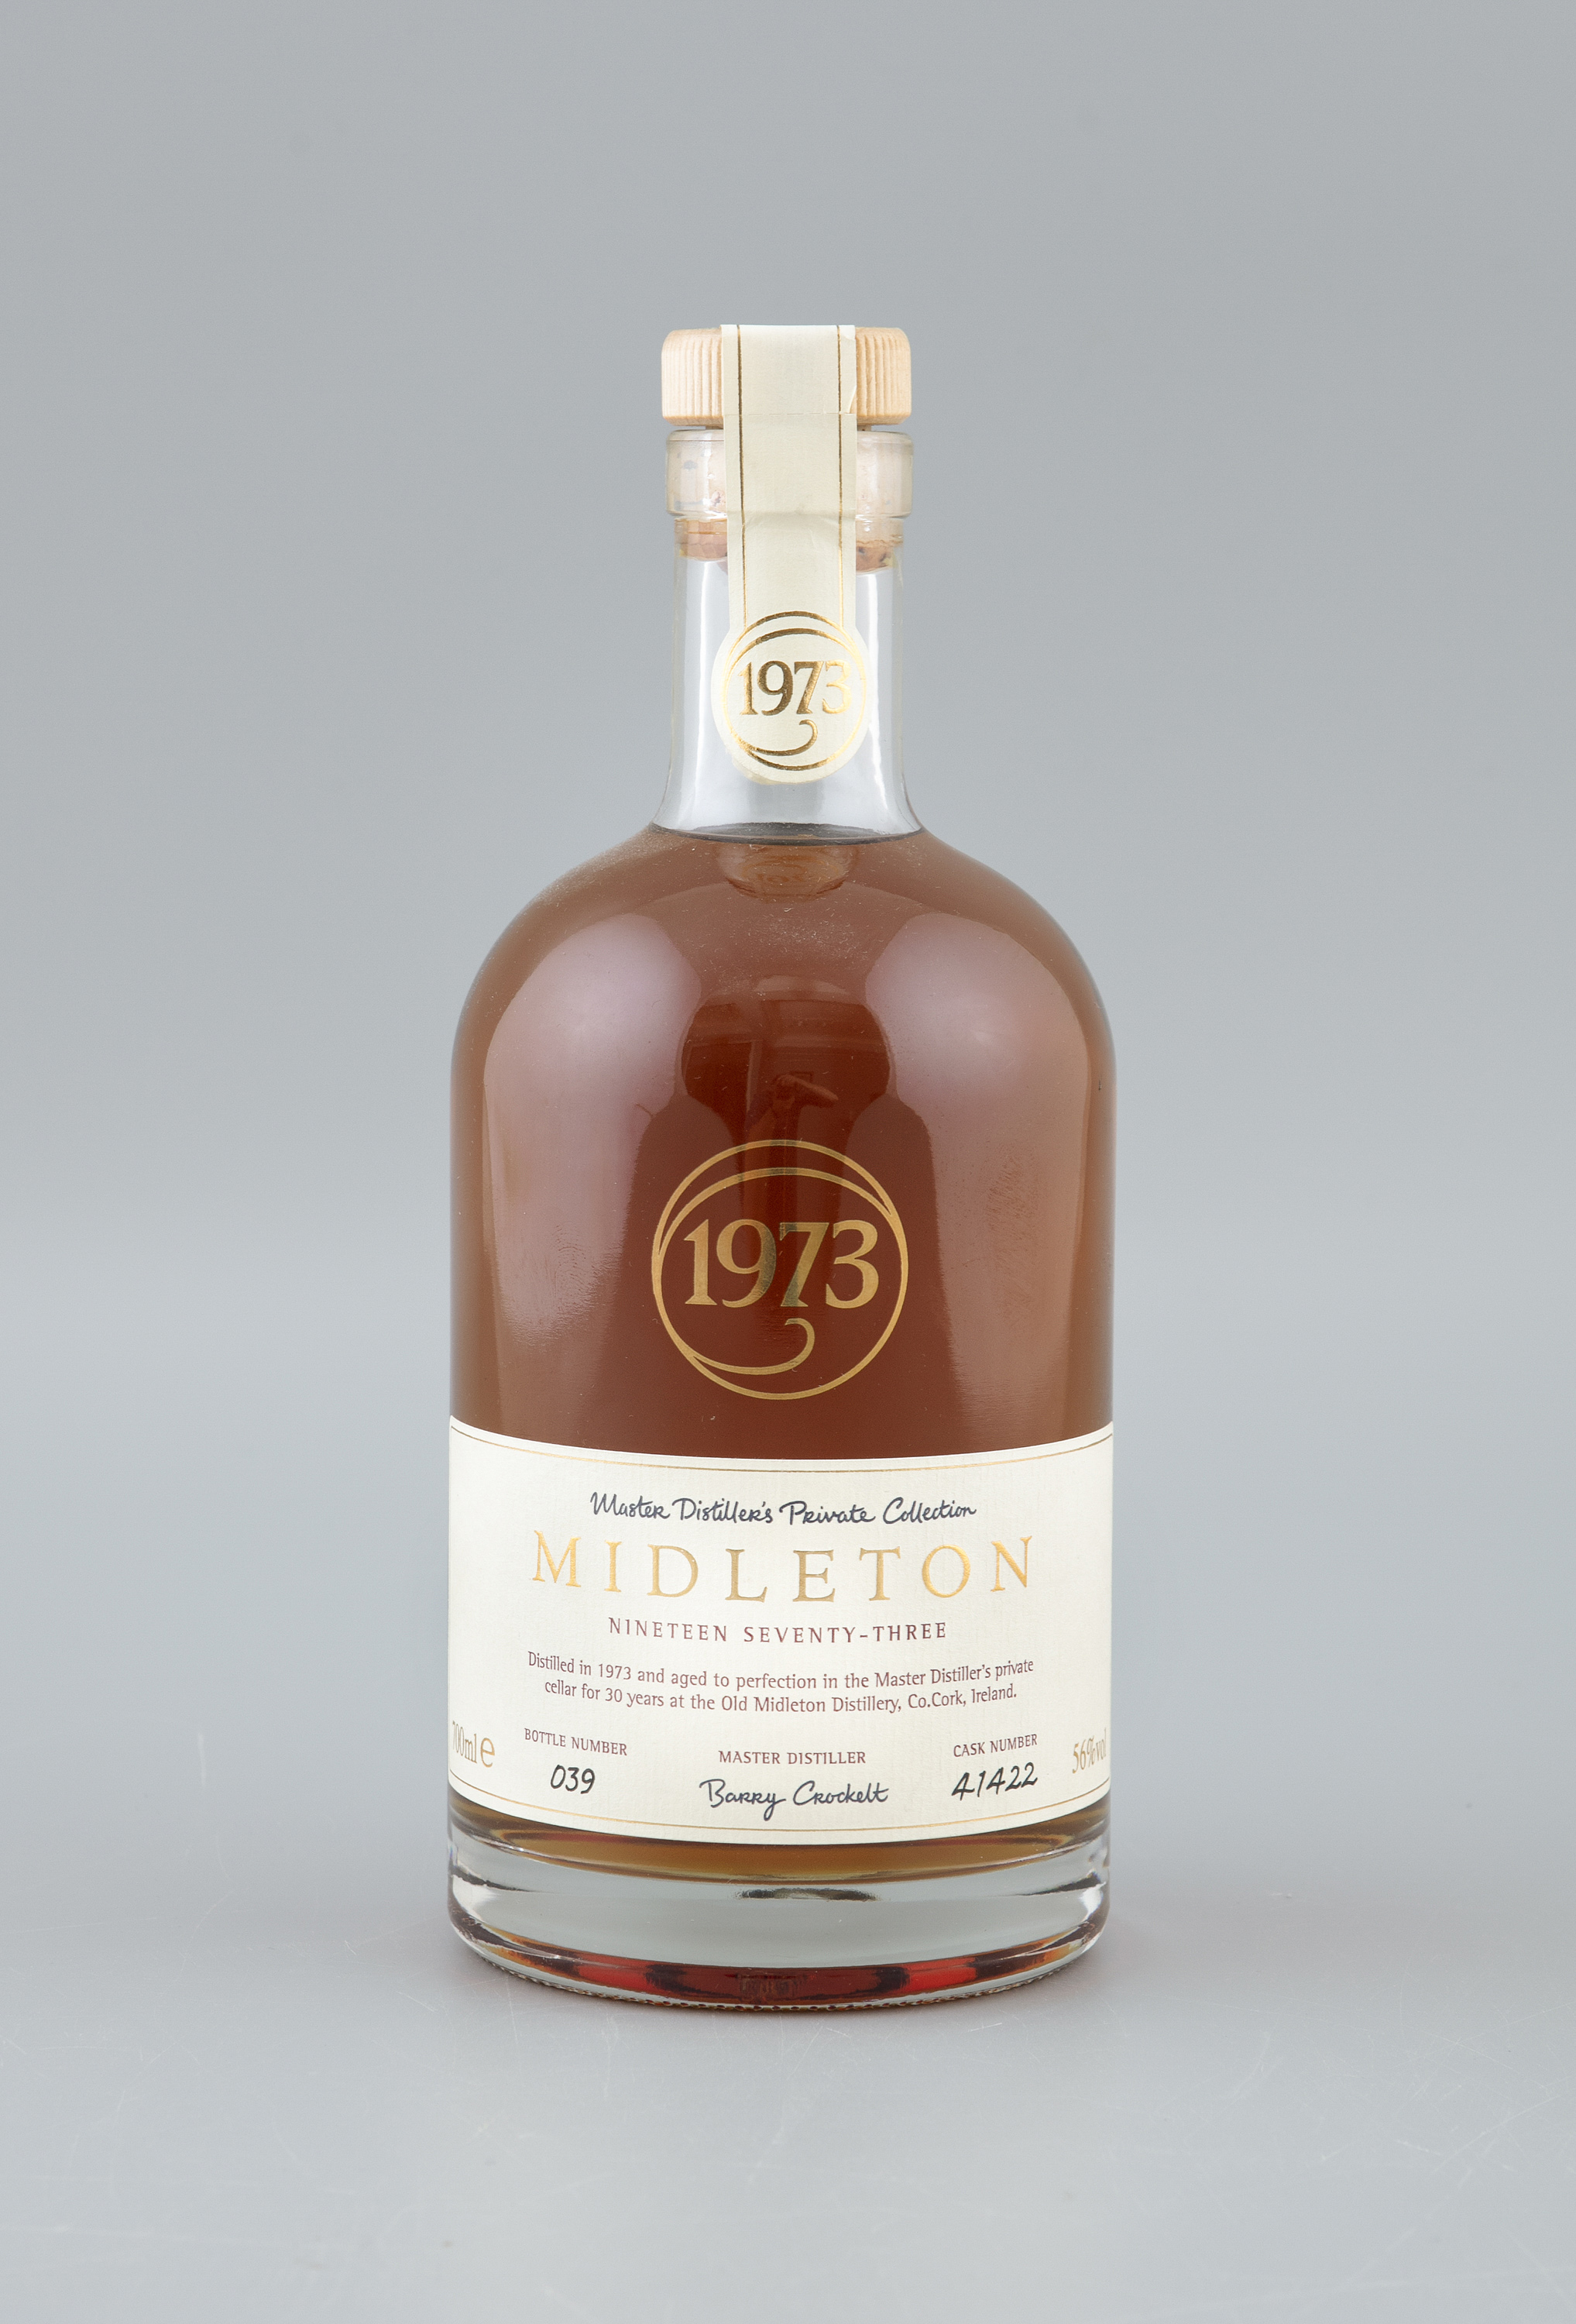 Midleton 25 Year Old Pure Pot Still Irish Whiskey 1 bottle in presentation case, bottle number 039 - Image 9 of 11